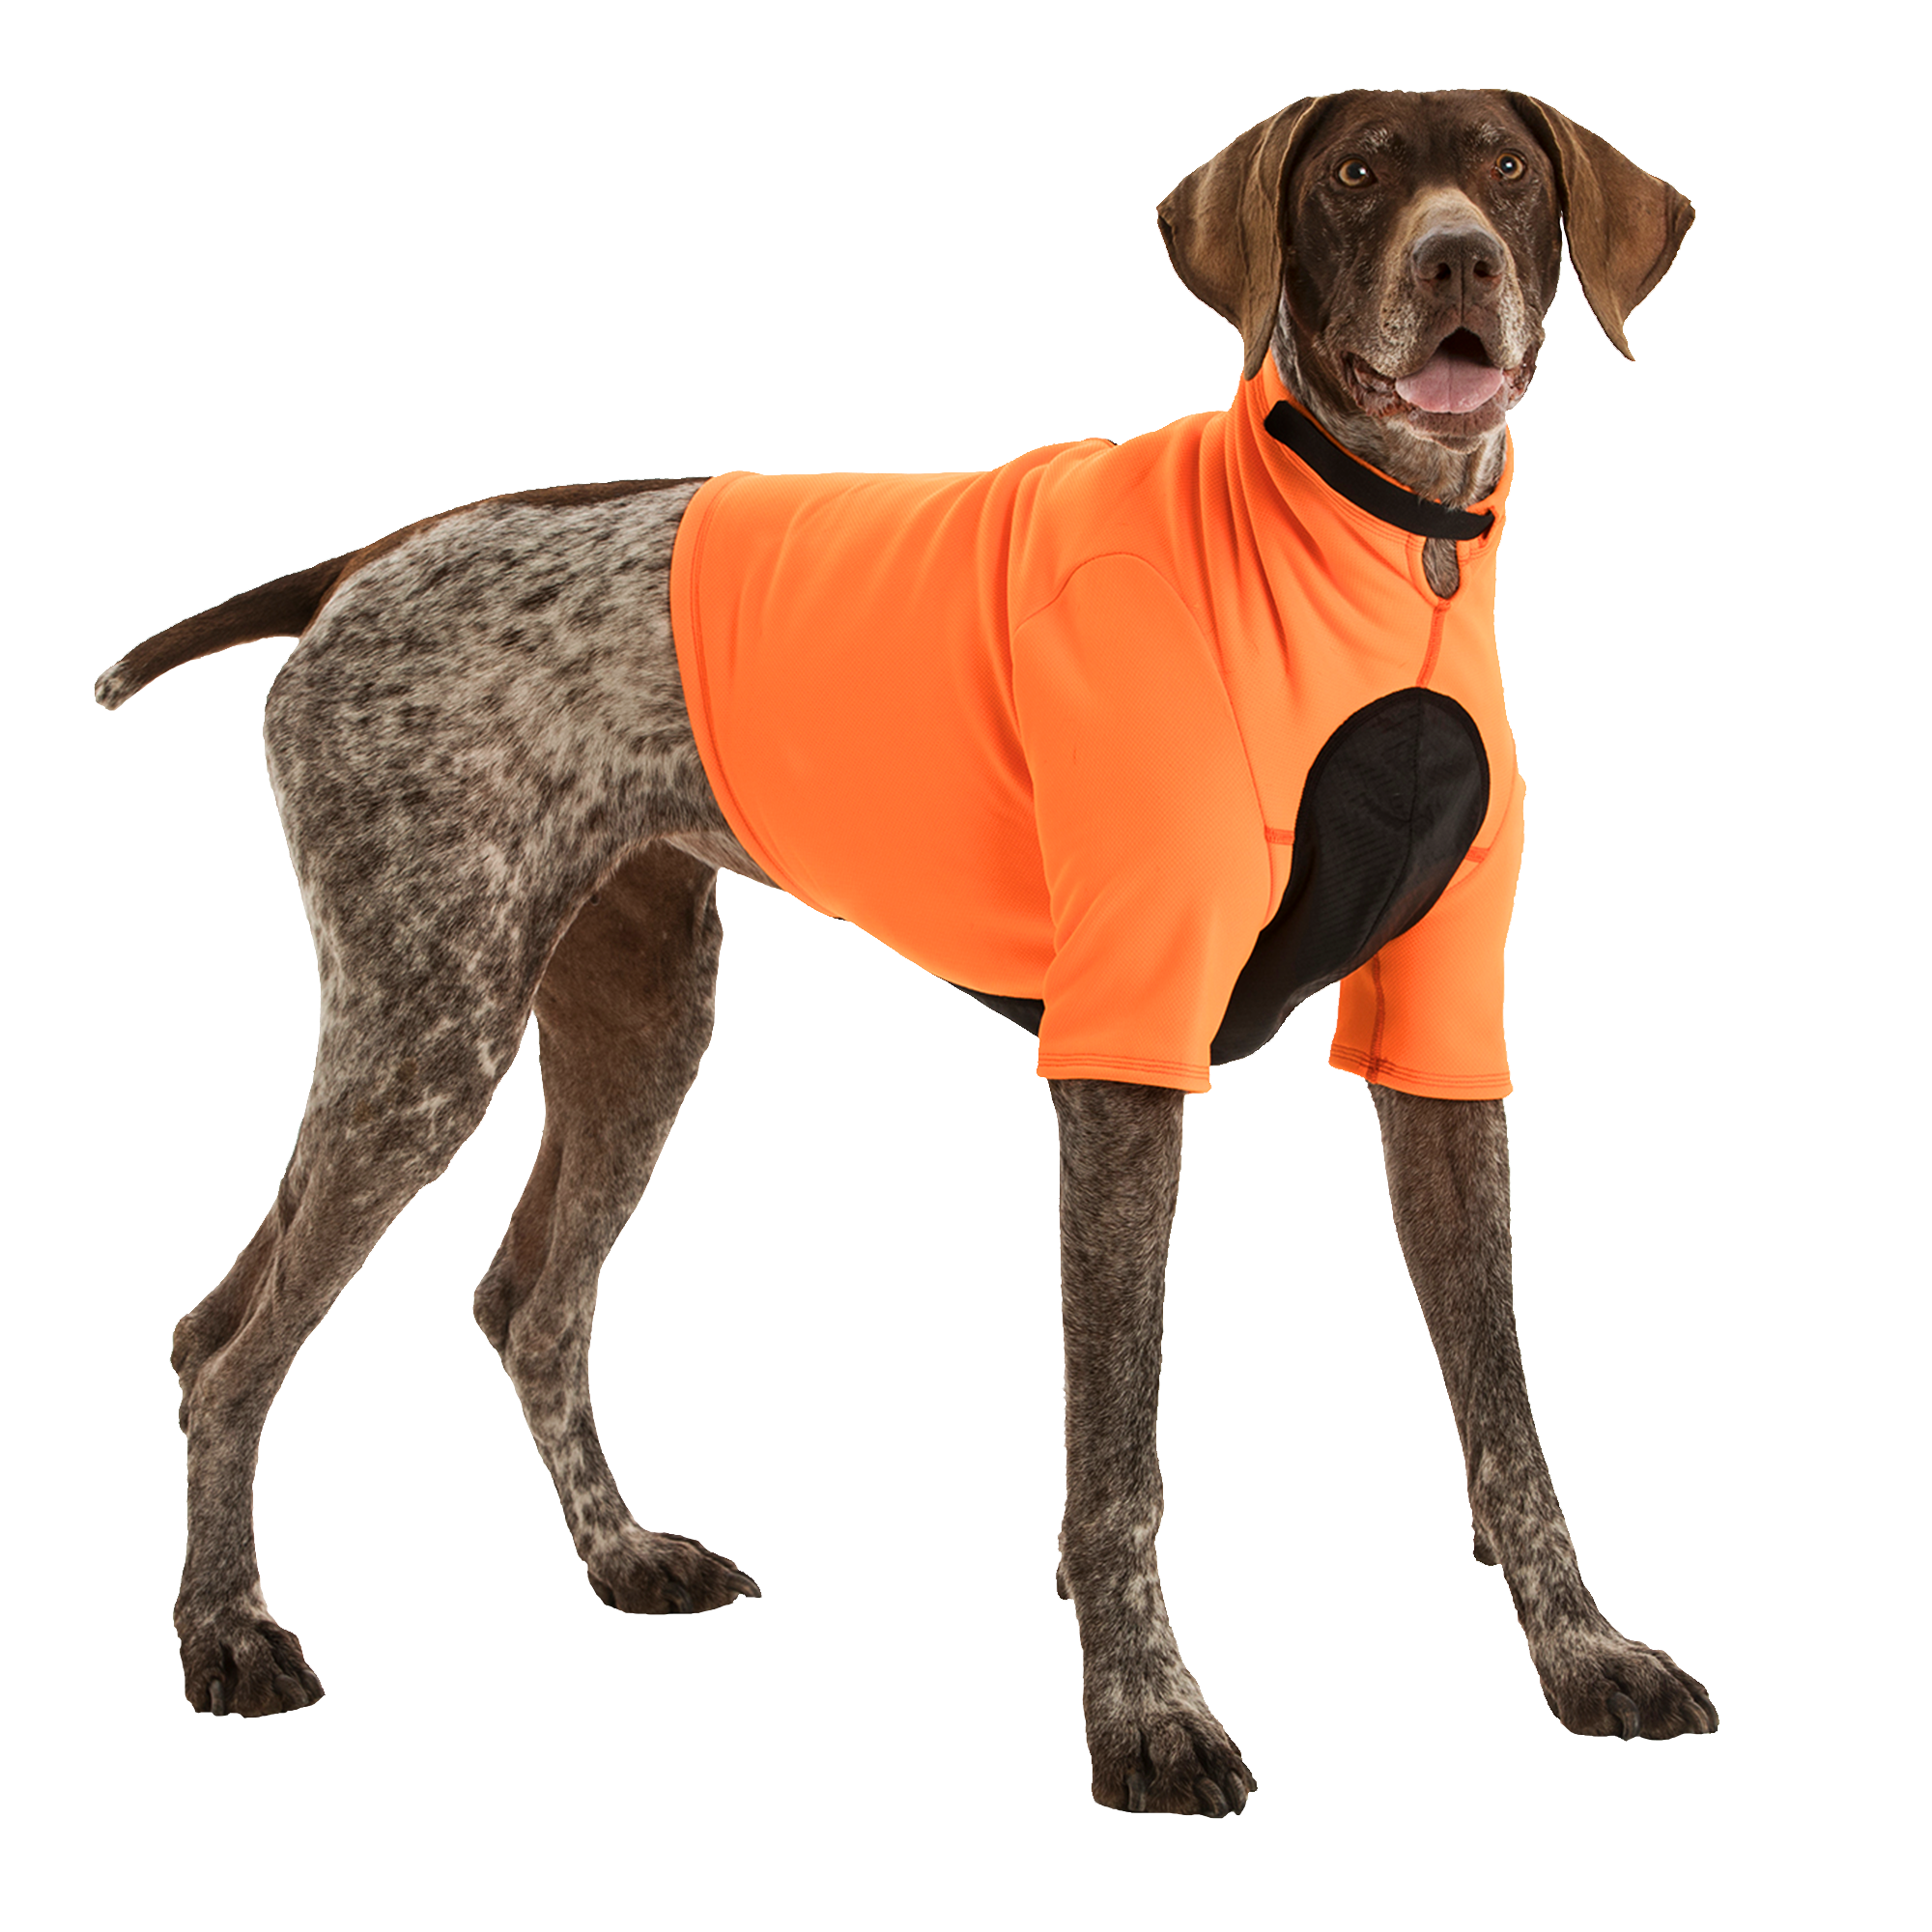 K9 Top Coat | Pointer in orange safety vest